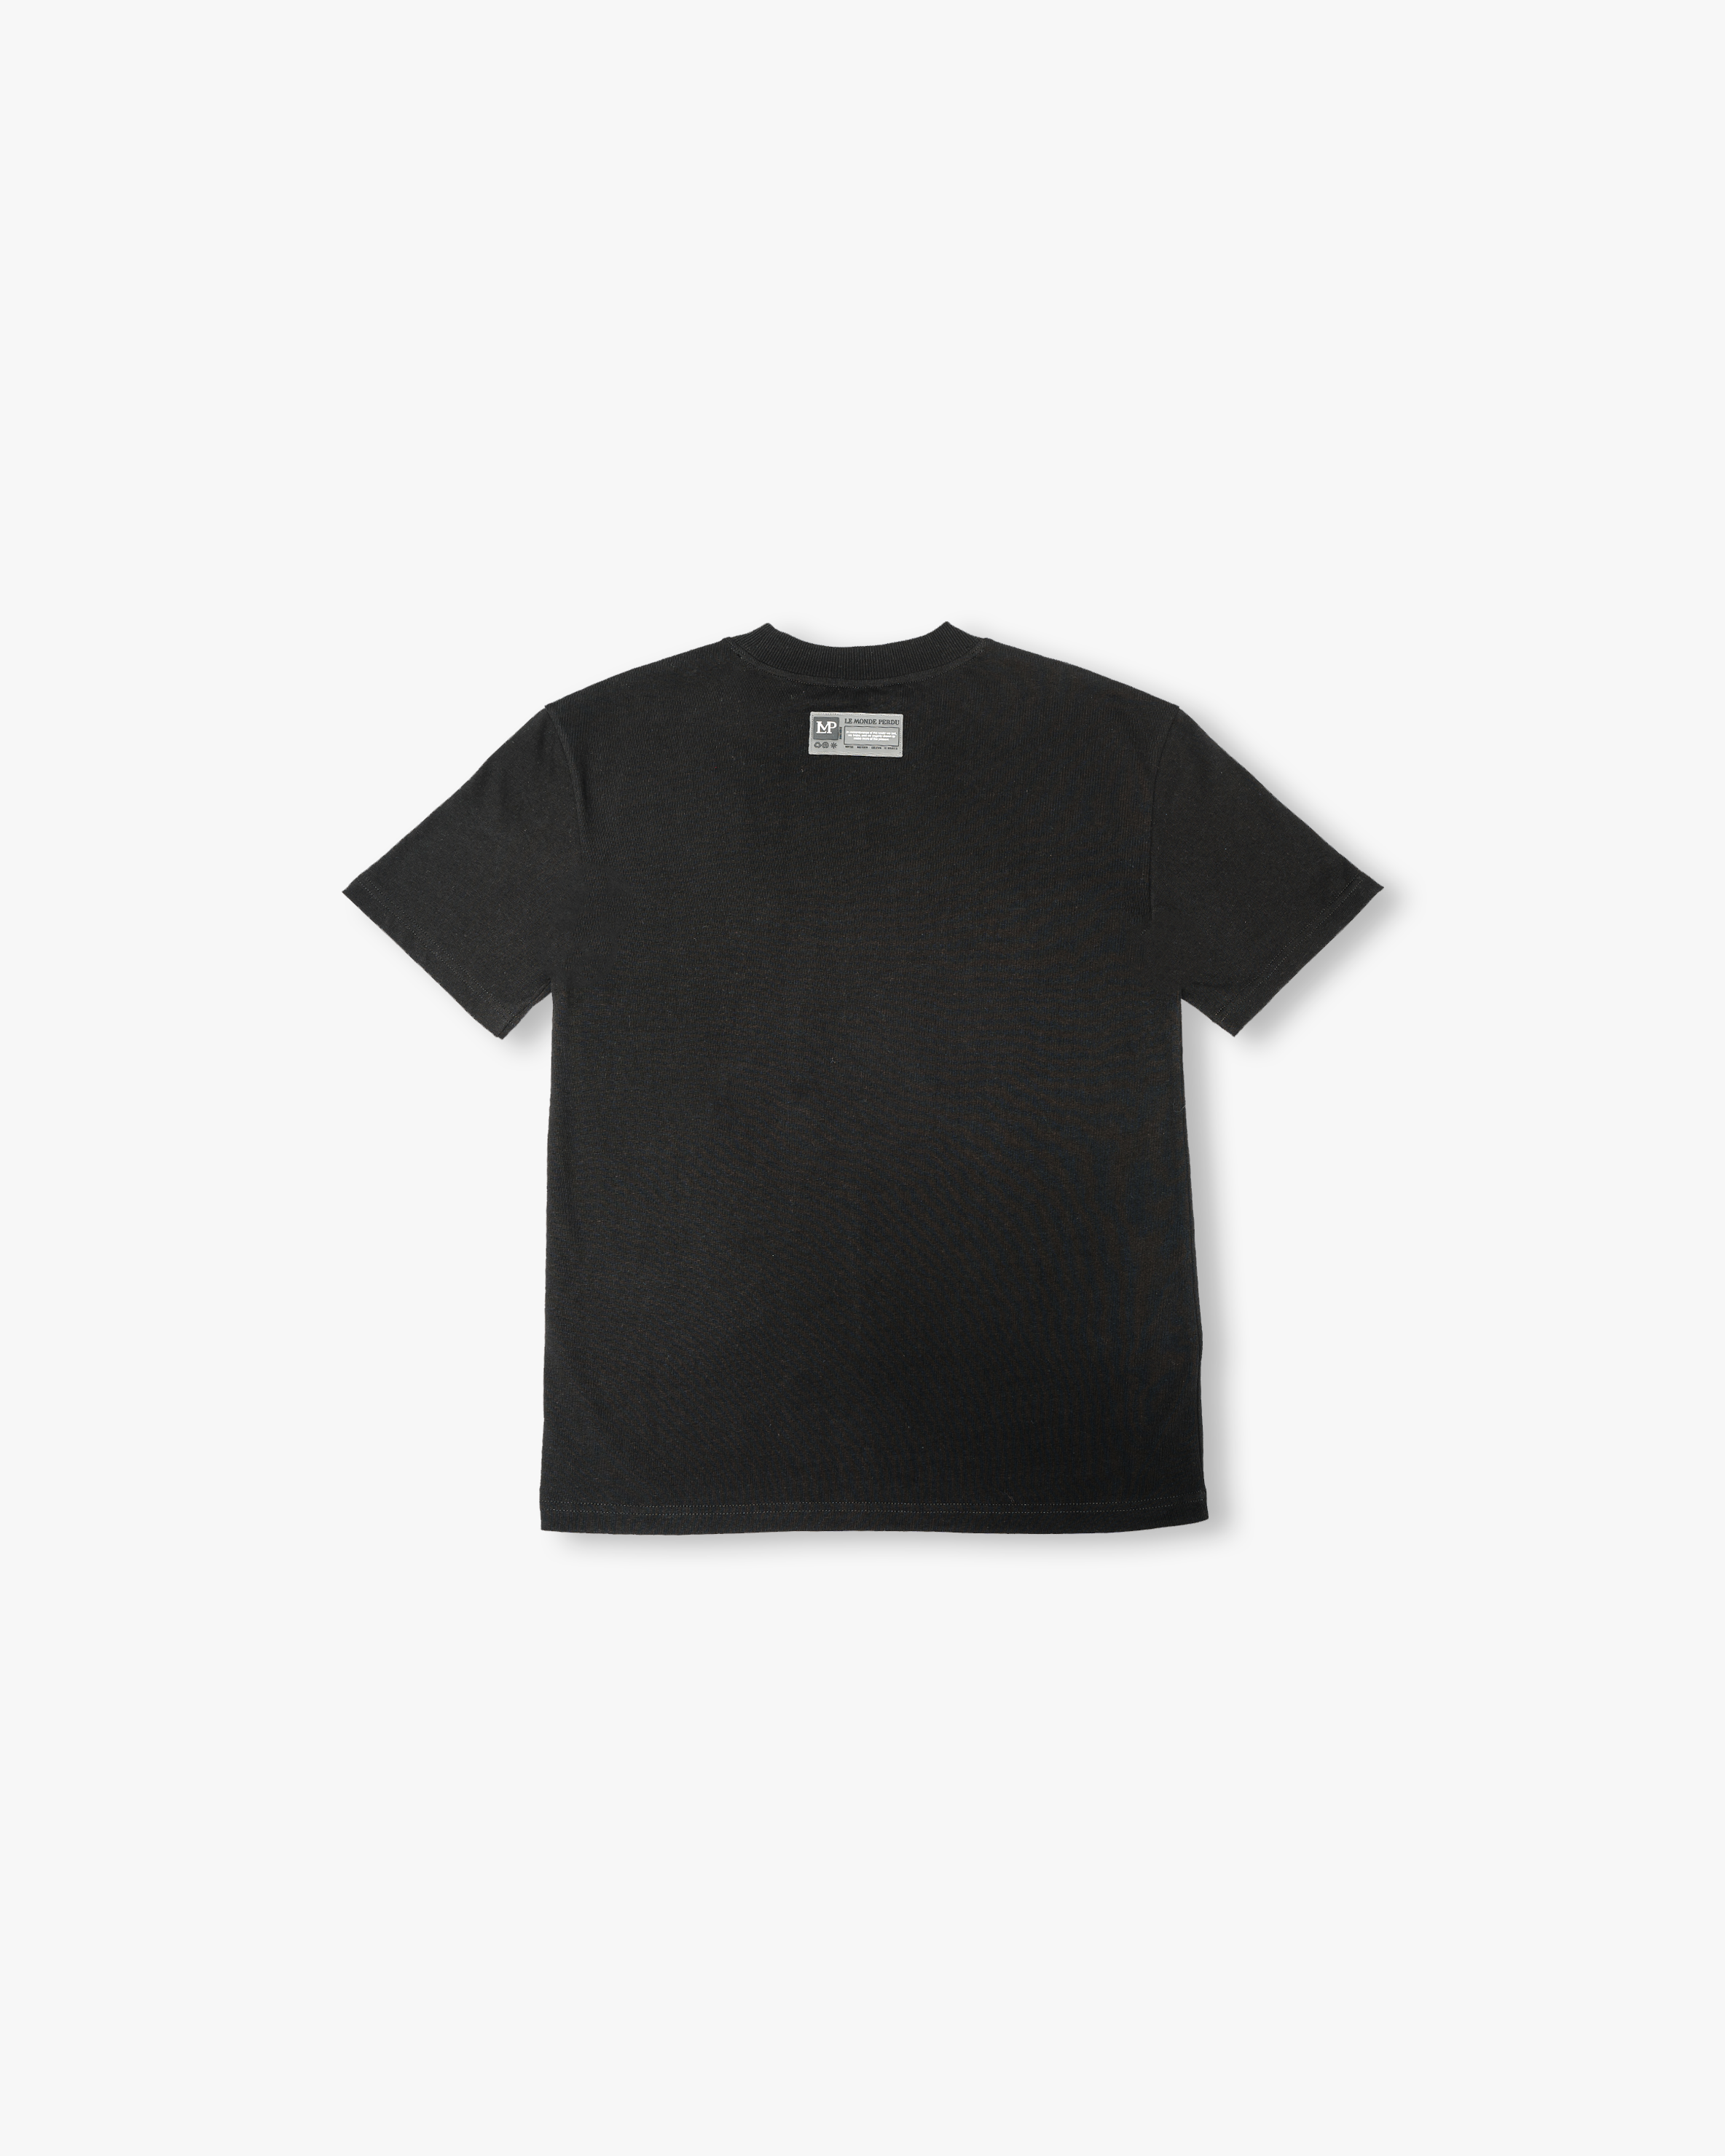 Limited Bird T-shirt Black